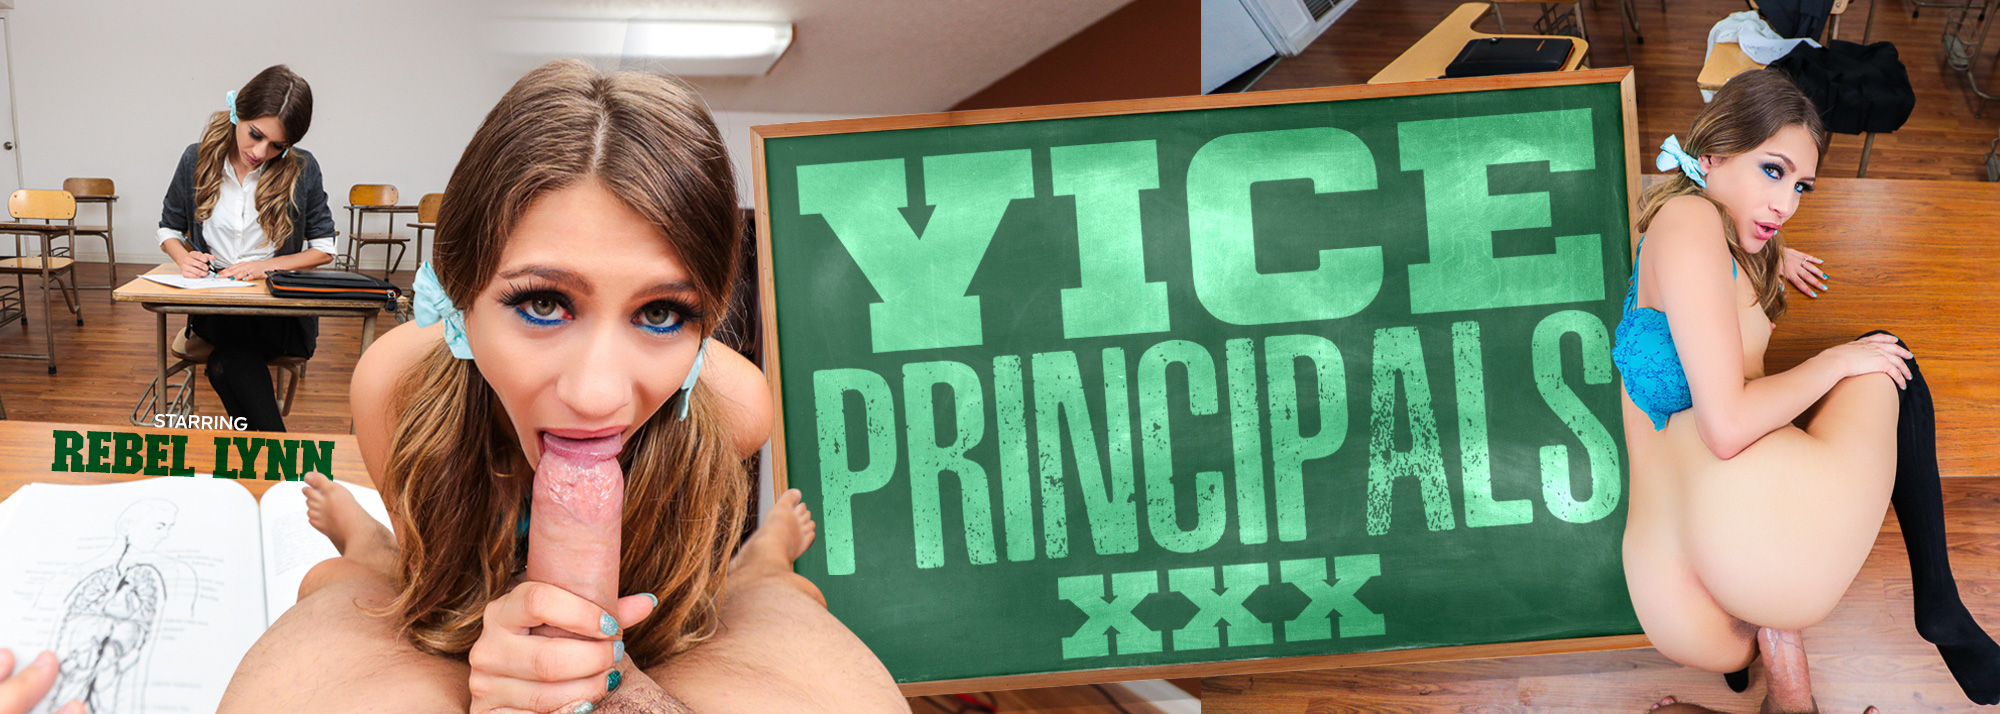 Vice Principals XXX with Rebel Lynn  Slideshow